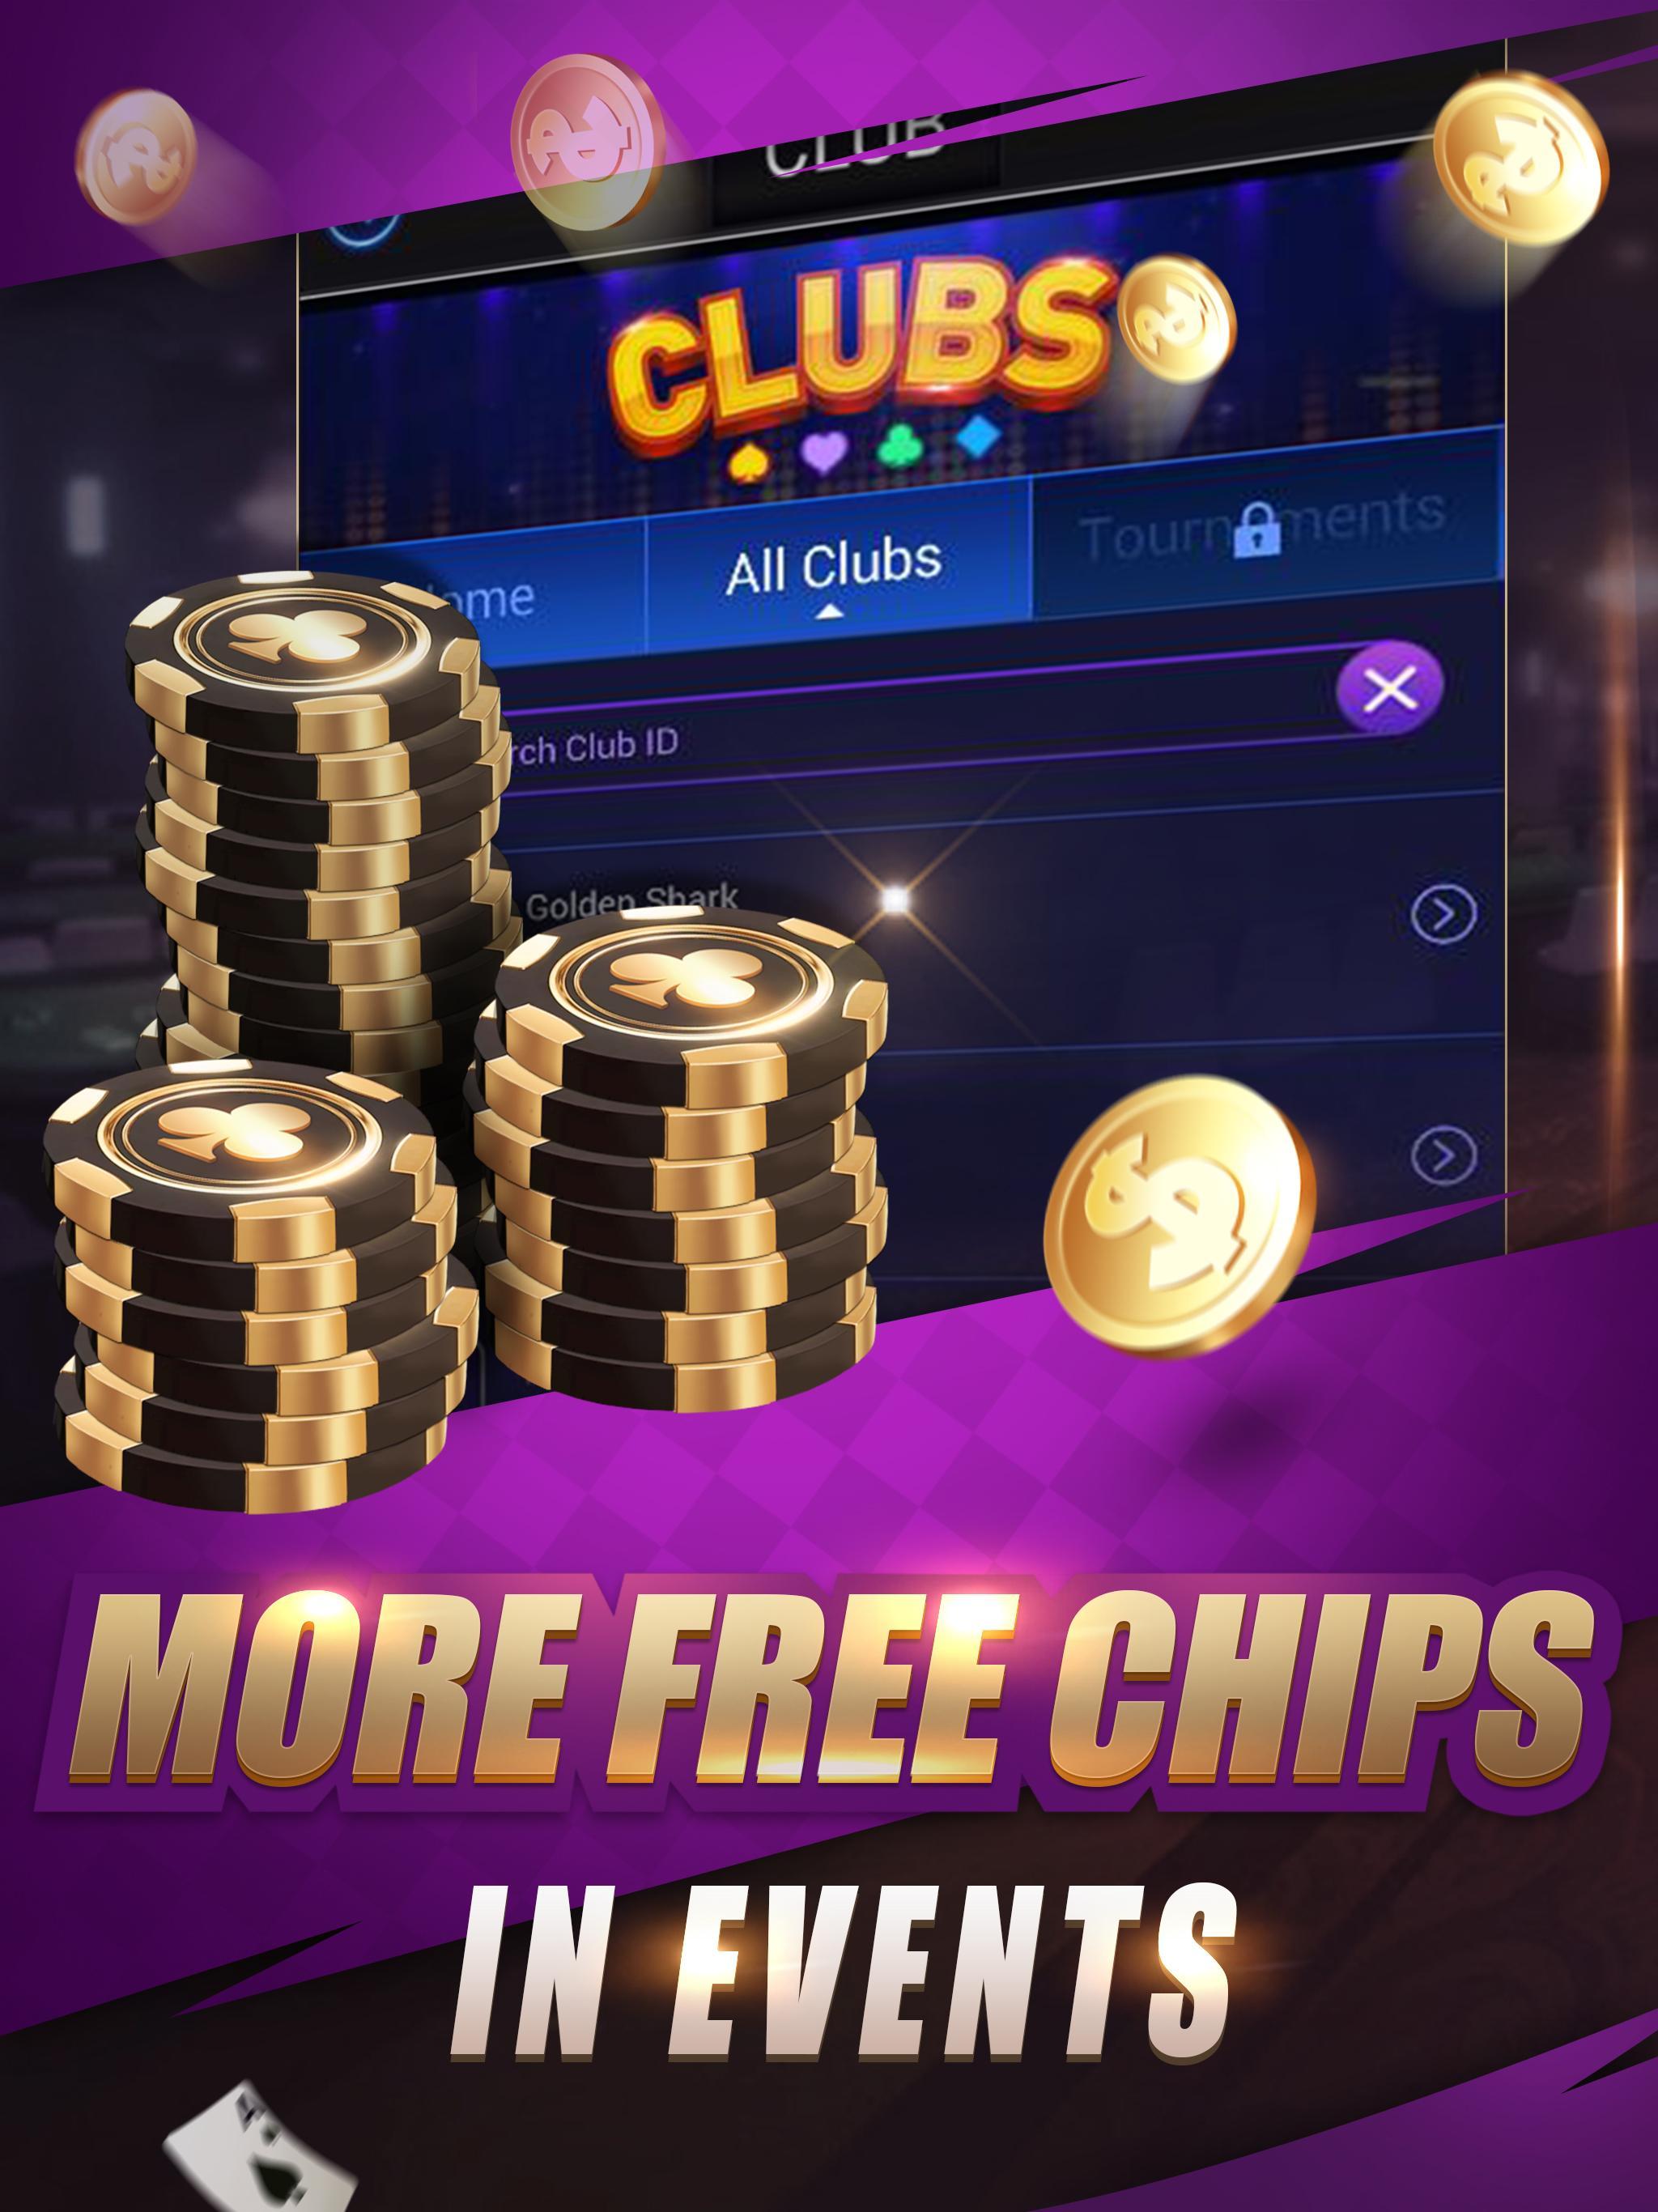 Jackpotcash mobile casino